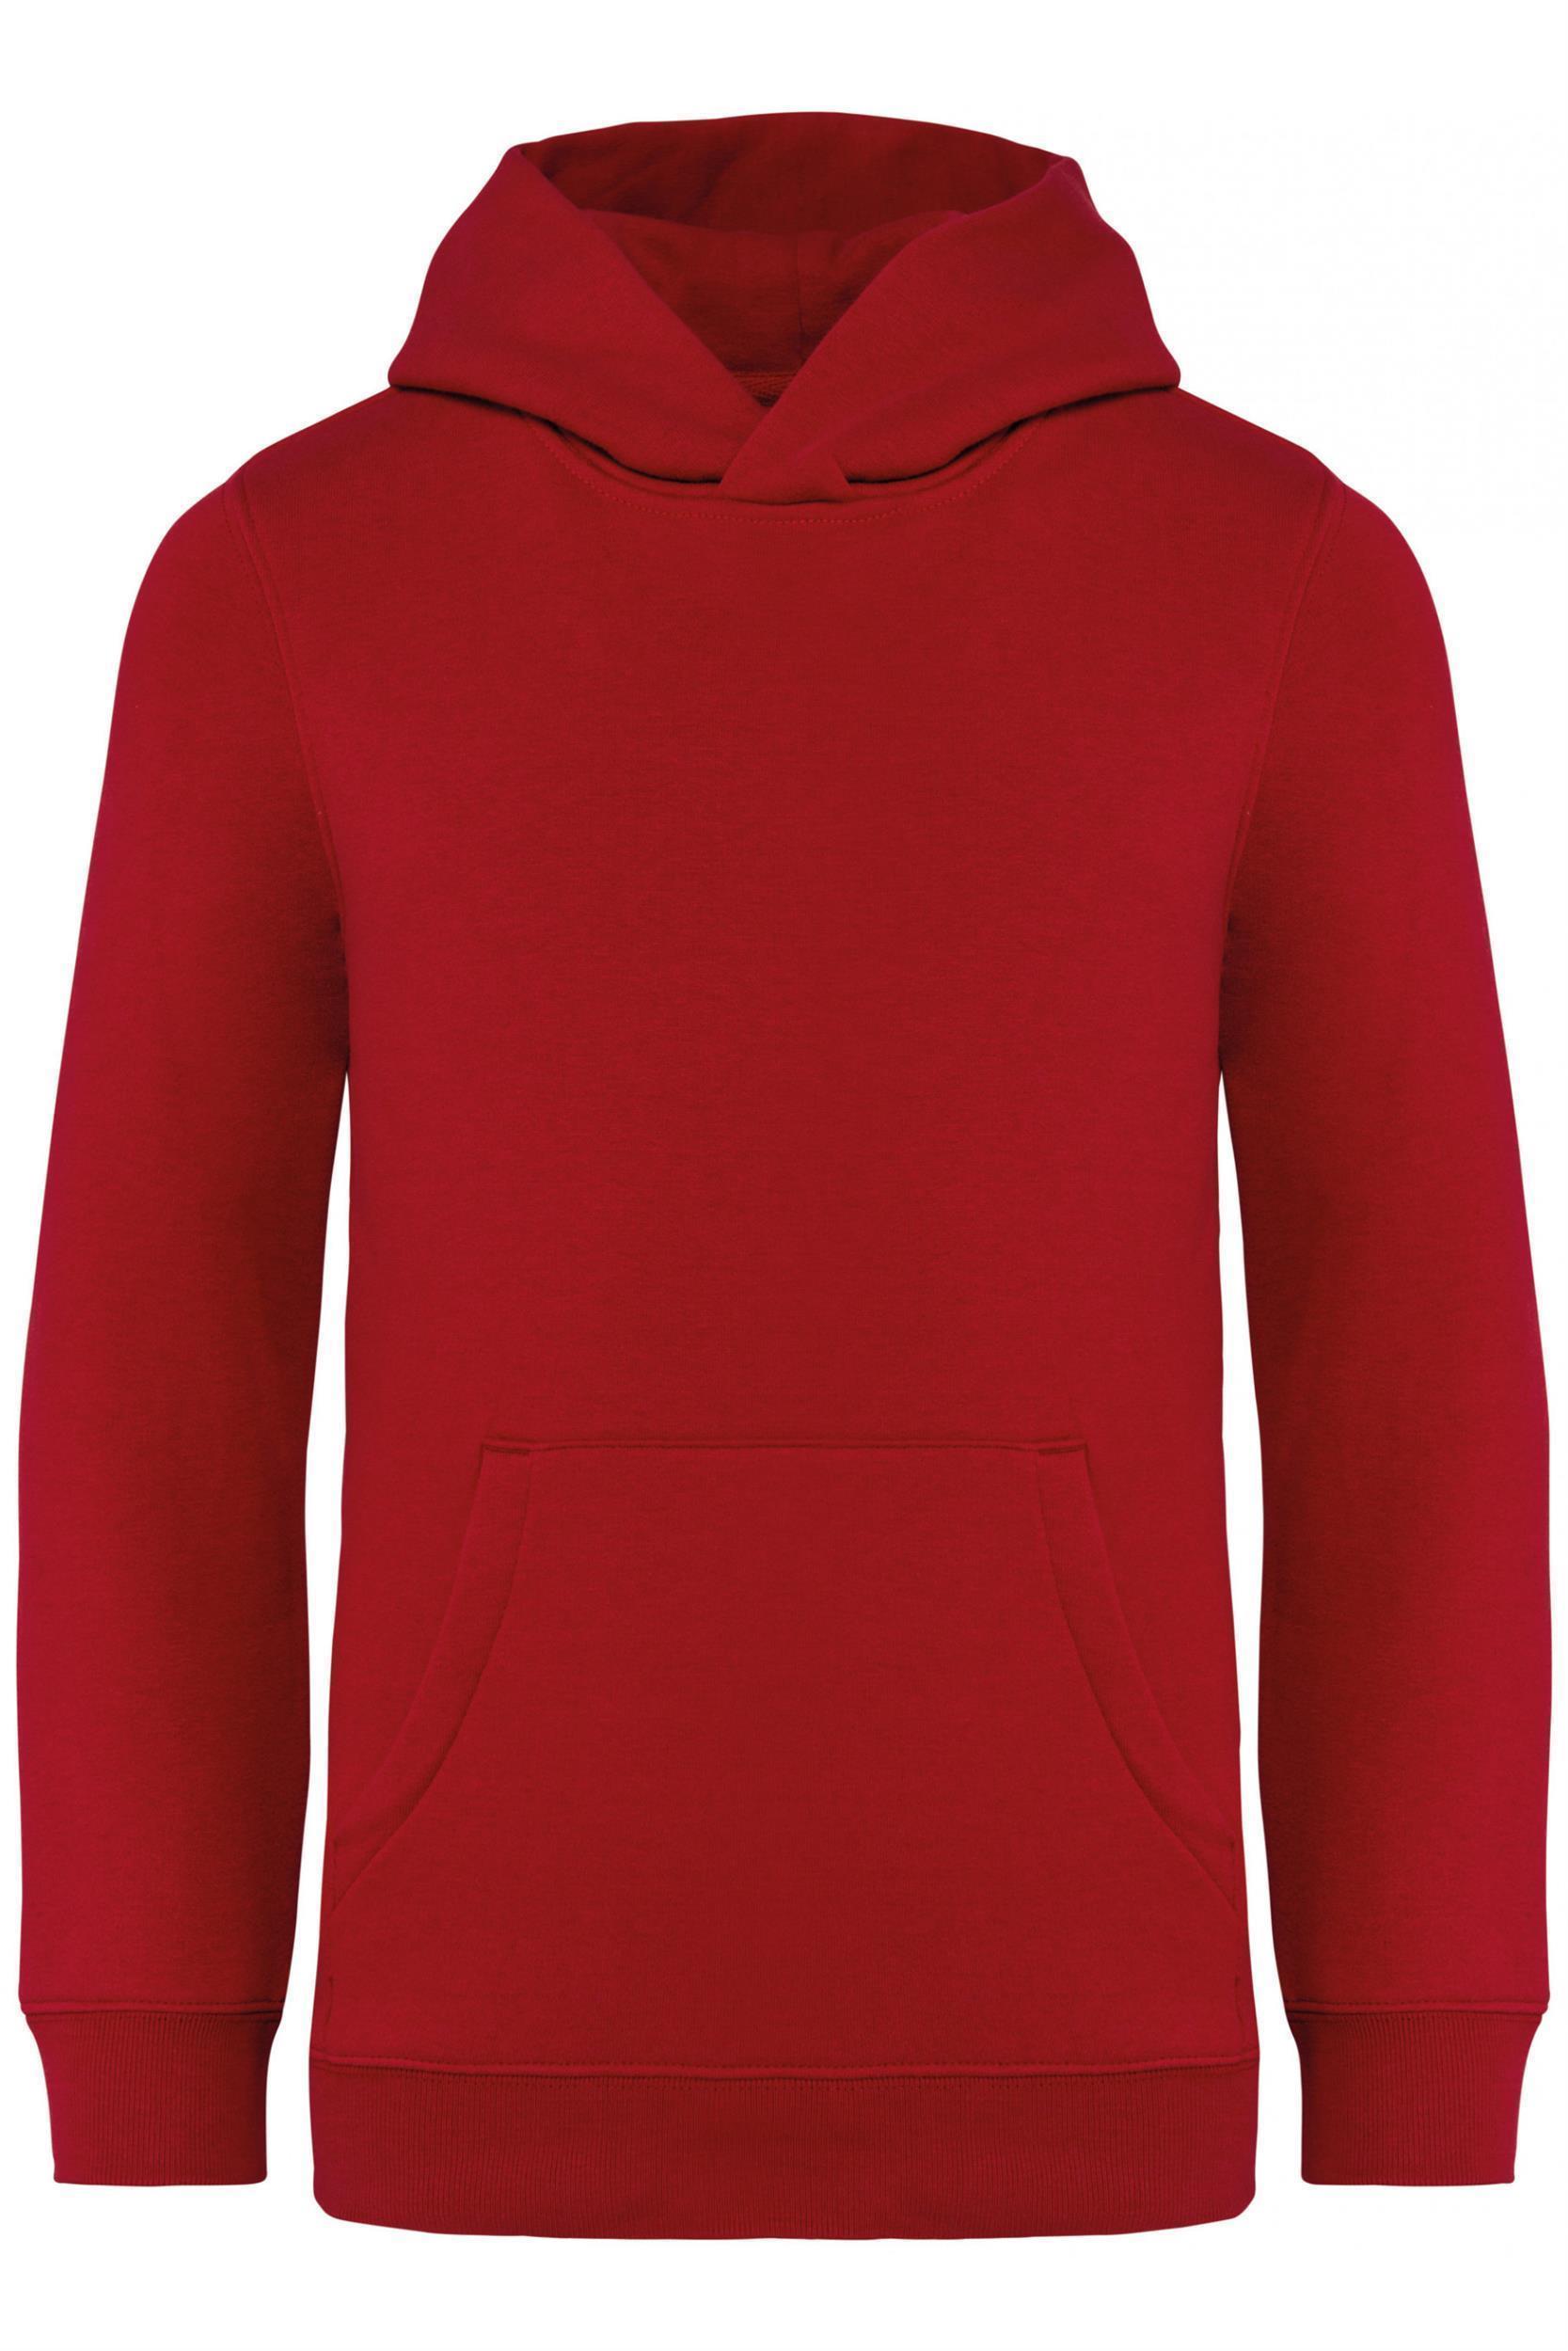 Children's sweatshirt with hood 350 g/m² cotton ART®